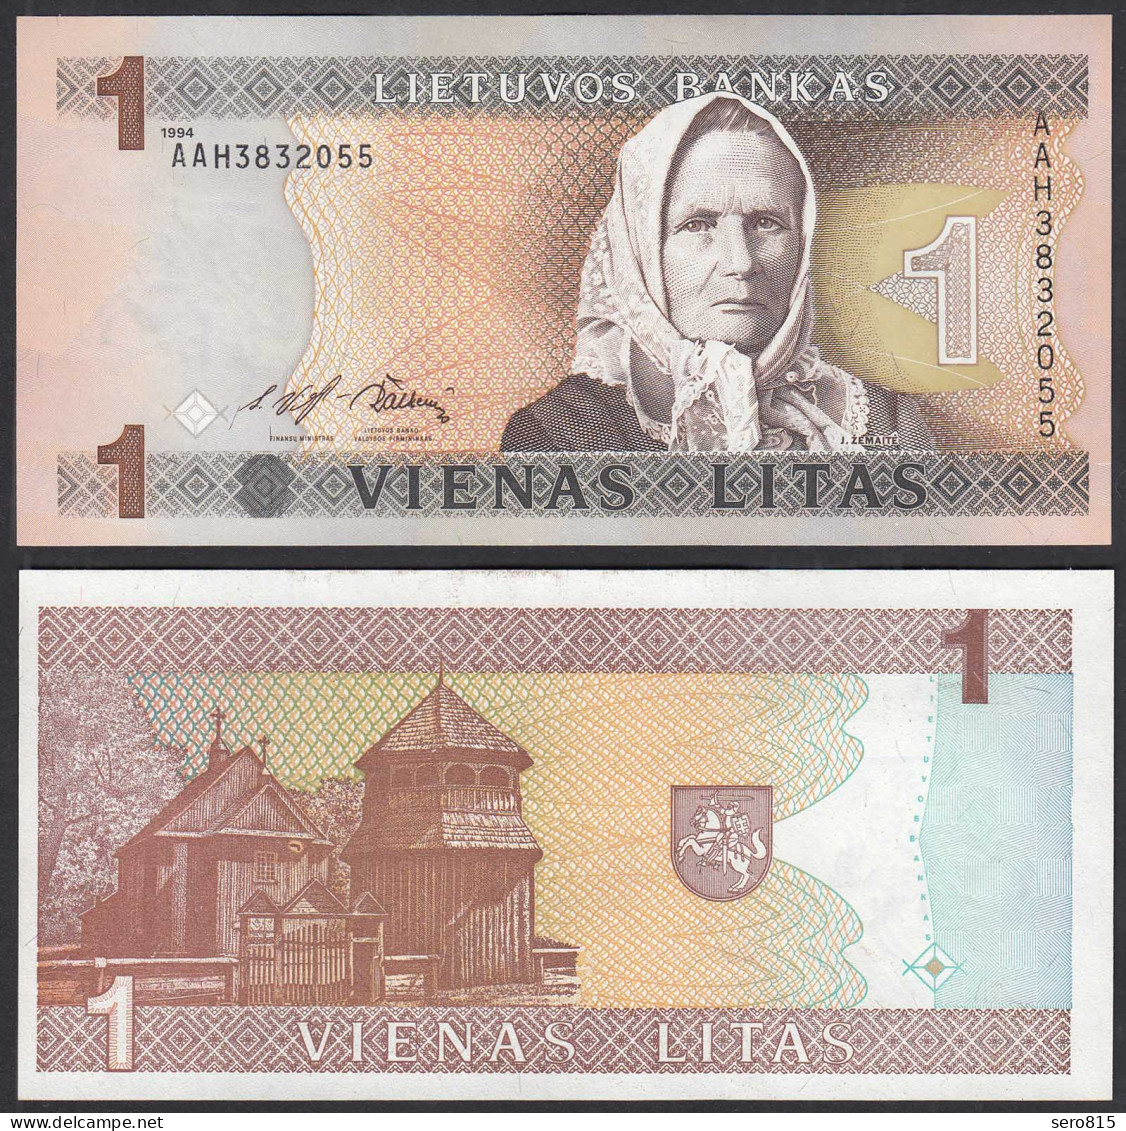 Litauen - Lithunia 1 Talonas Banknote 1994 Pick 53a UNC (1)    (31867 - Litauen